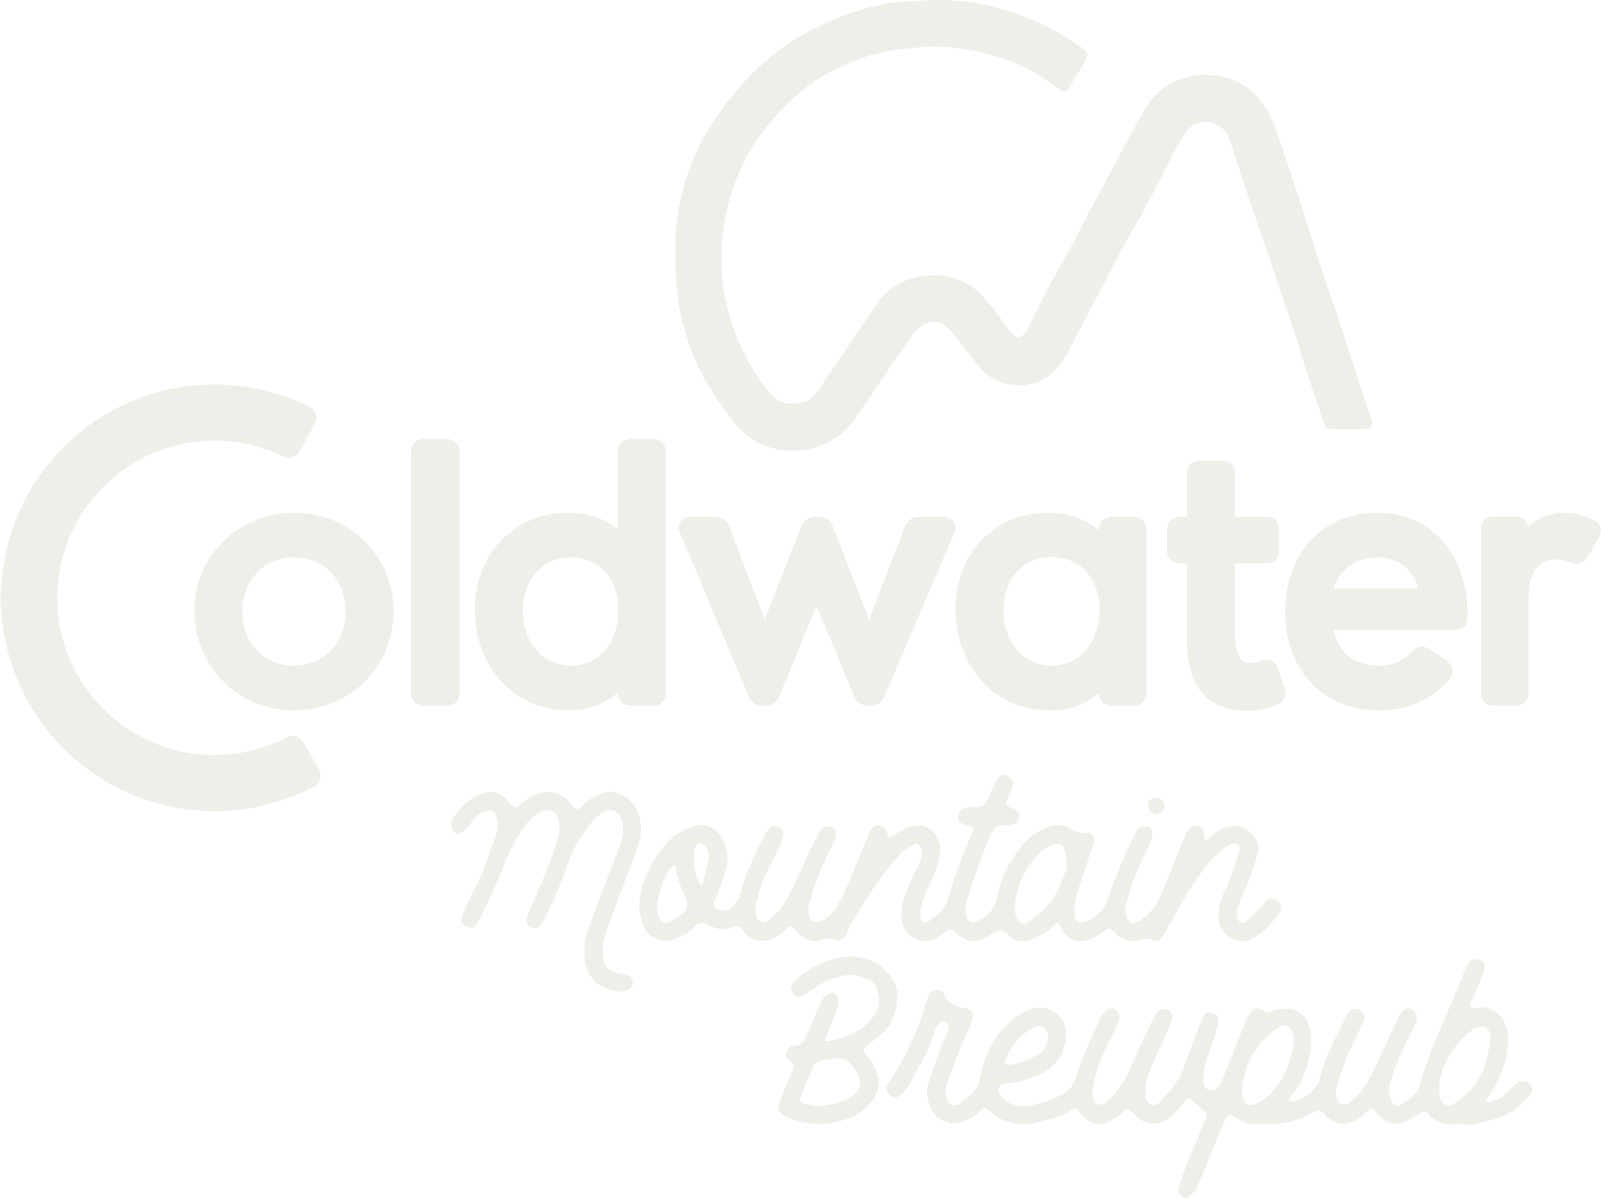 coldwater-brewpub-logo